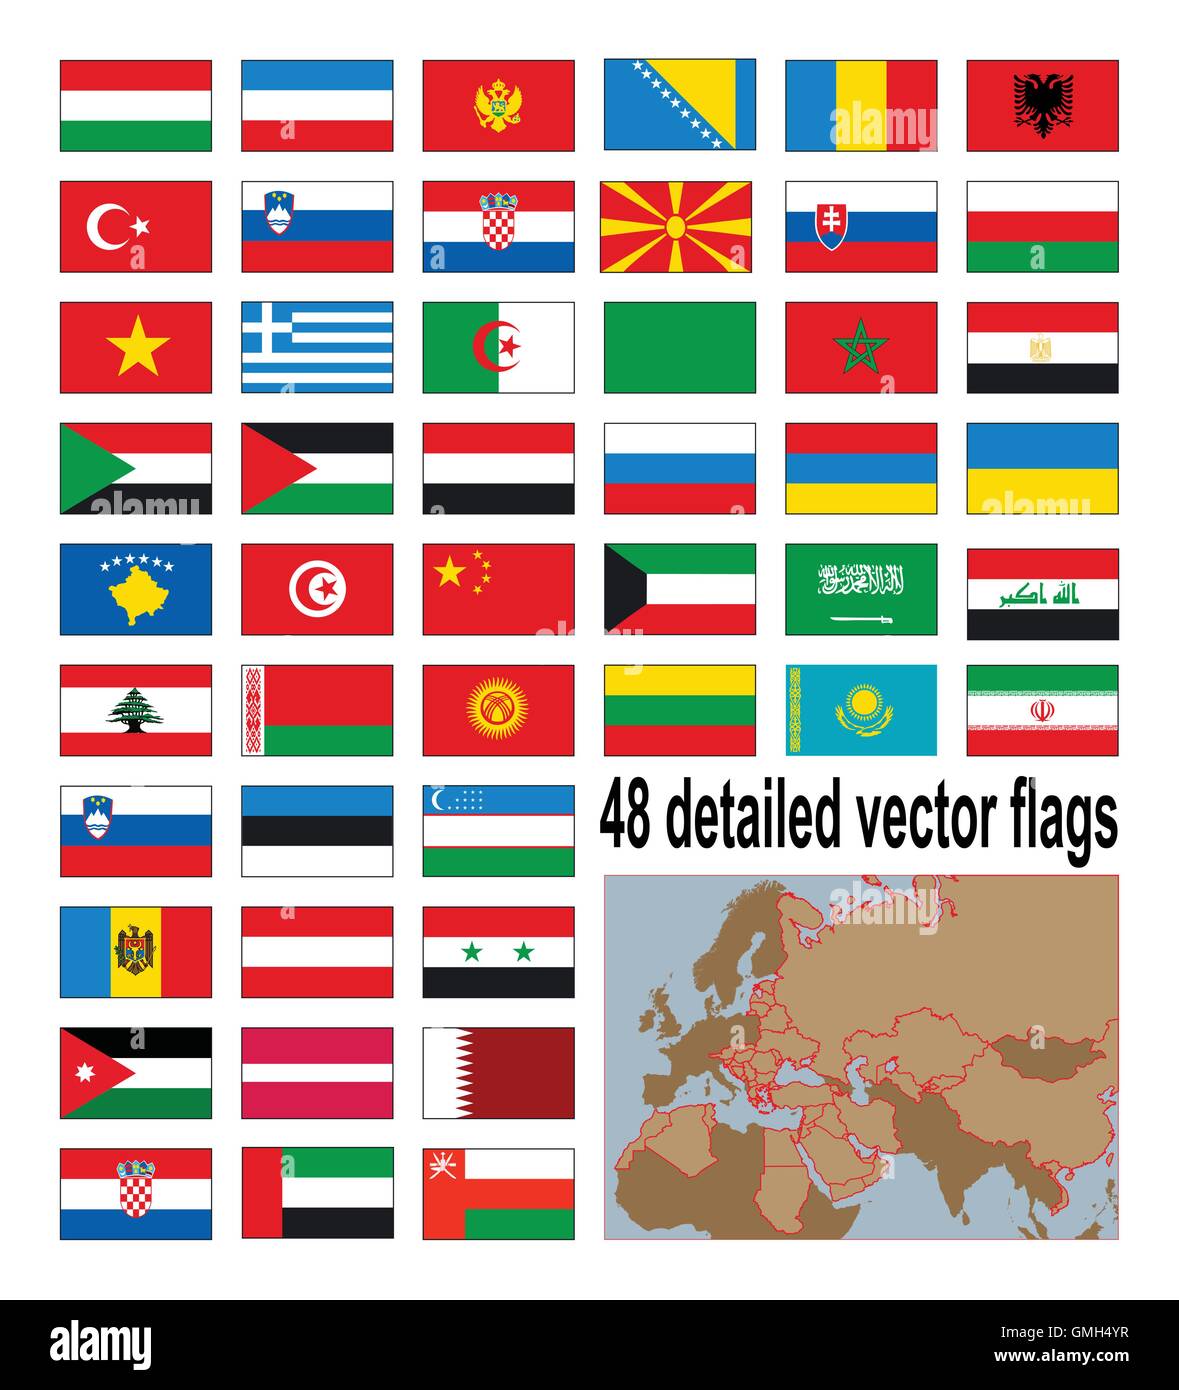 Detailed vector flags of 48 European, Asian and African states. Algeria, Egypt, Greece, Iran, Iraq, Jordan, Lebanon, etc. Stock Vector